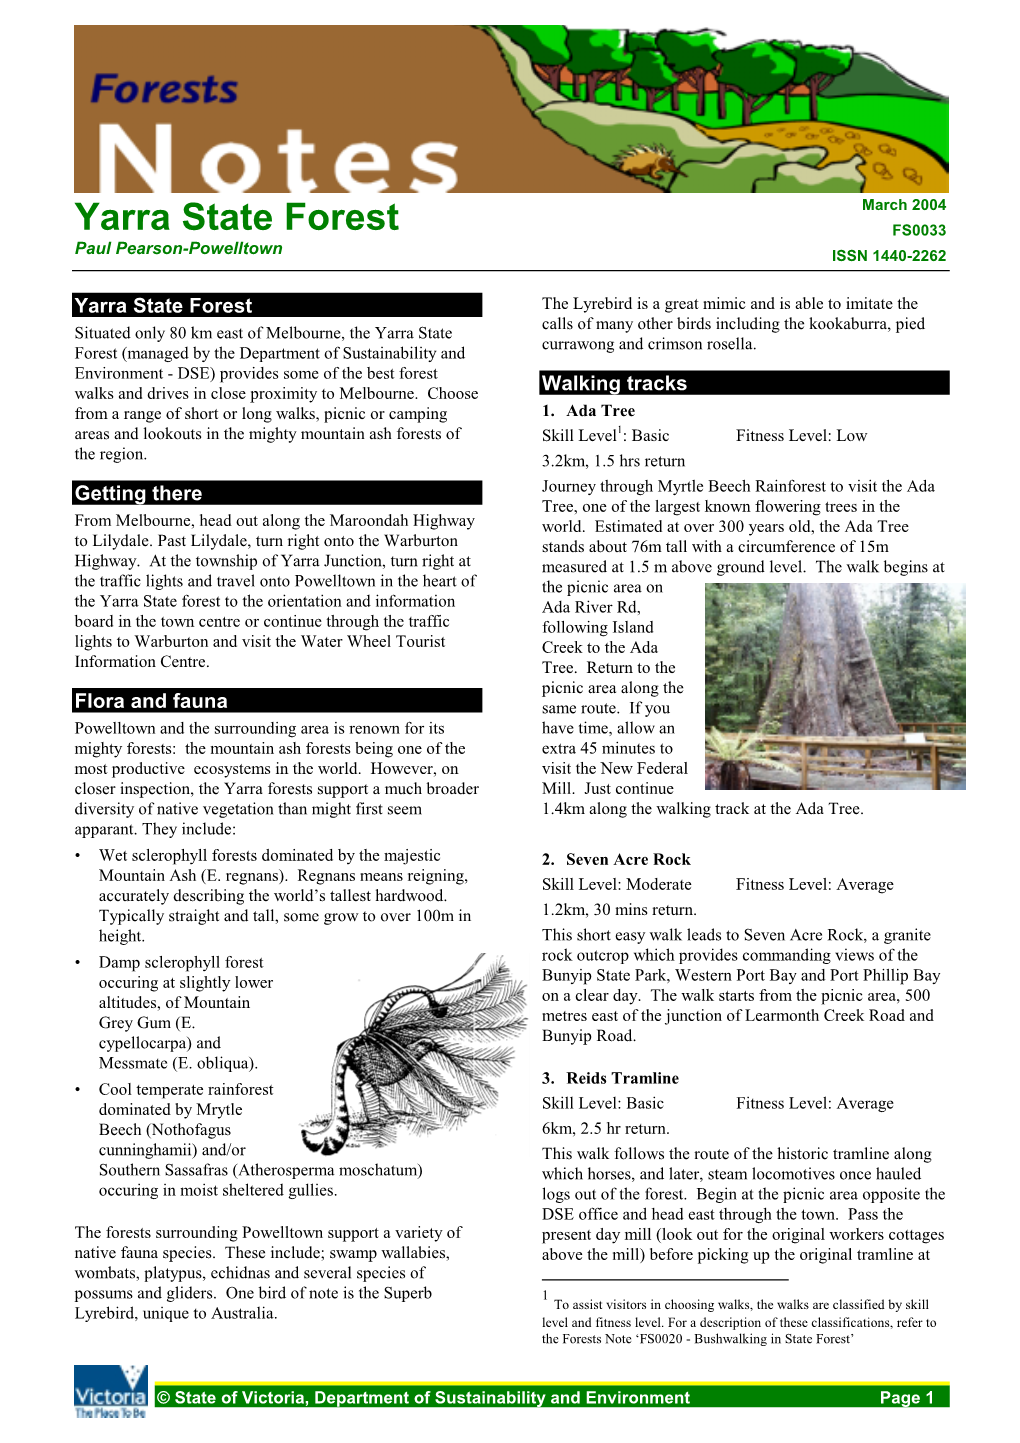 Yarra State Forest FS0033 Paul Pearson-Powelltown ISSN 1440-2262